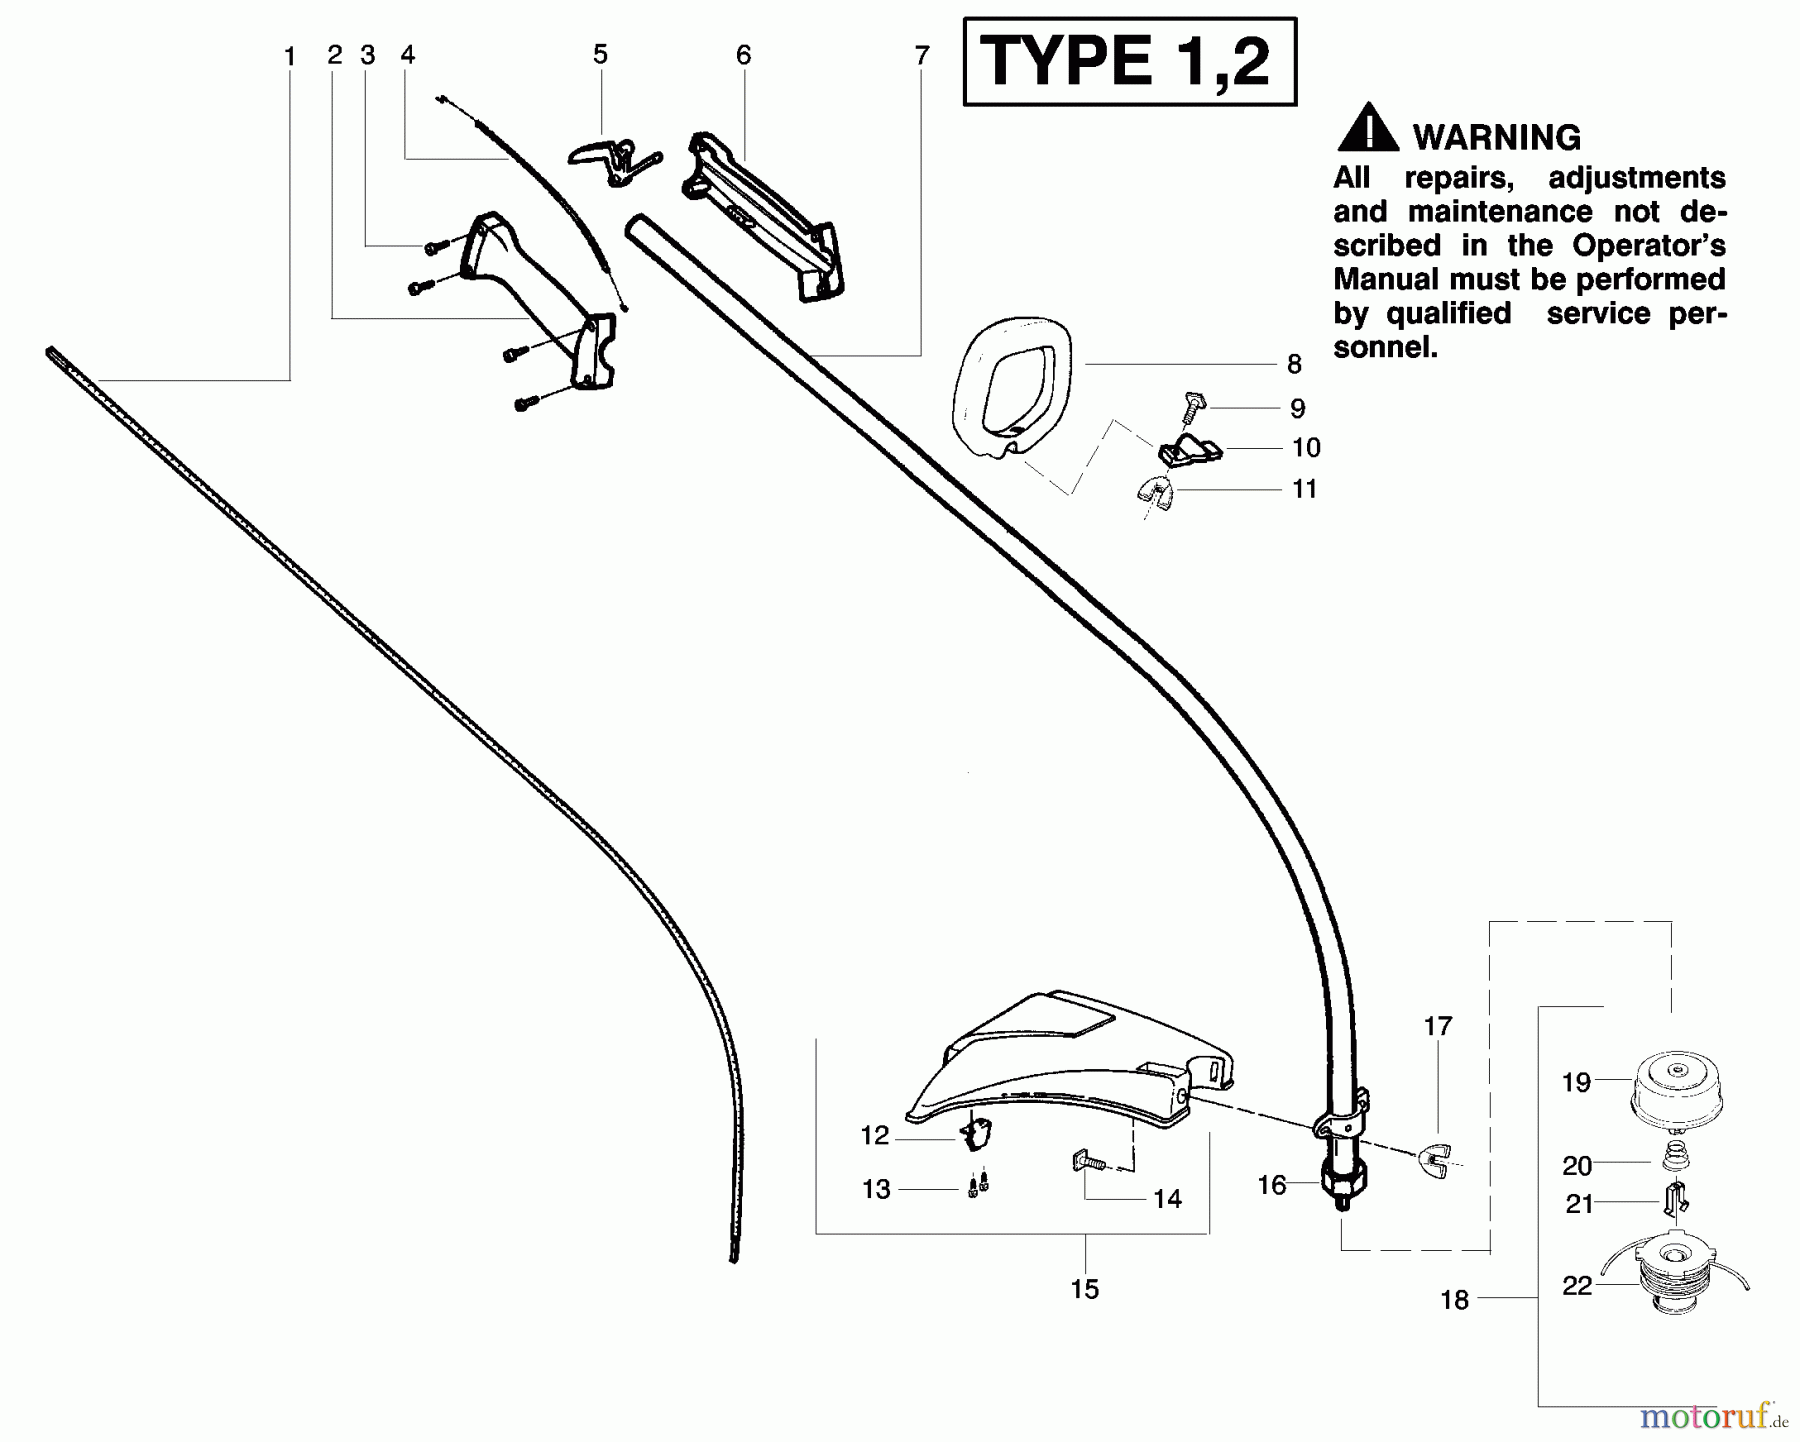  Poulan / Weed Eater Motorsensen, Trimmer XT250 (Type 1) - Weed Eater String Trimmer Handle & Shaft Assembly